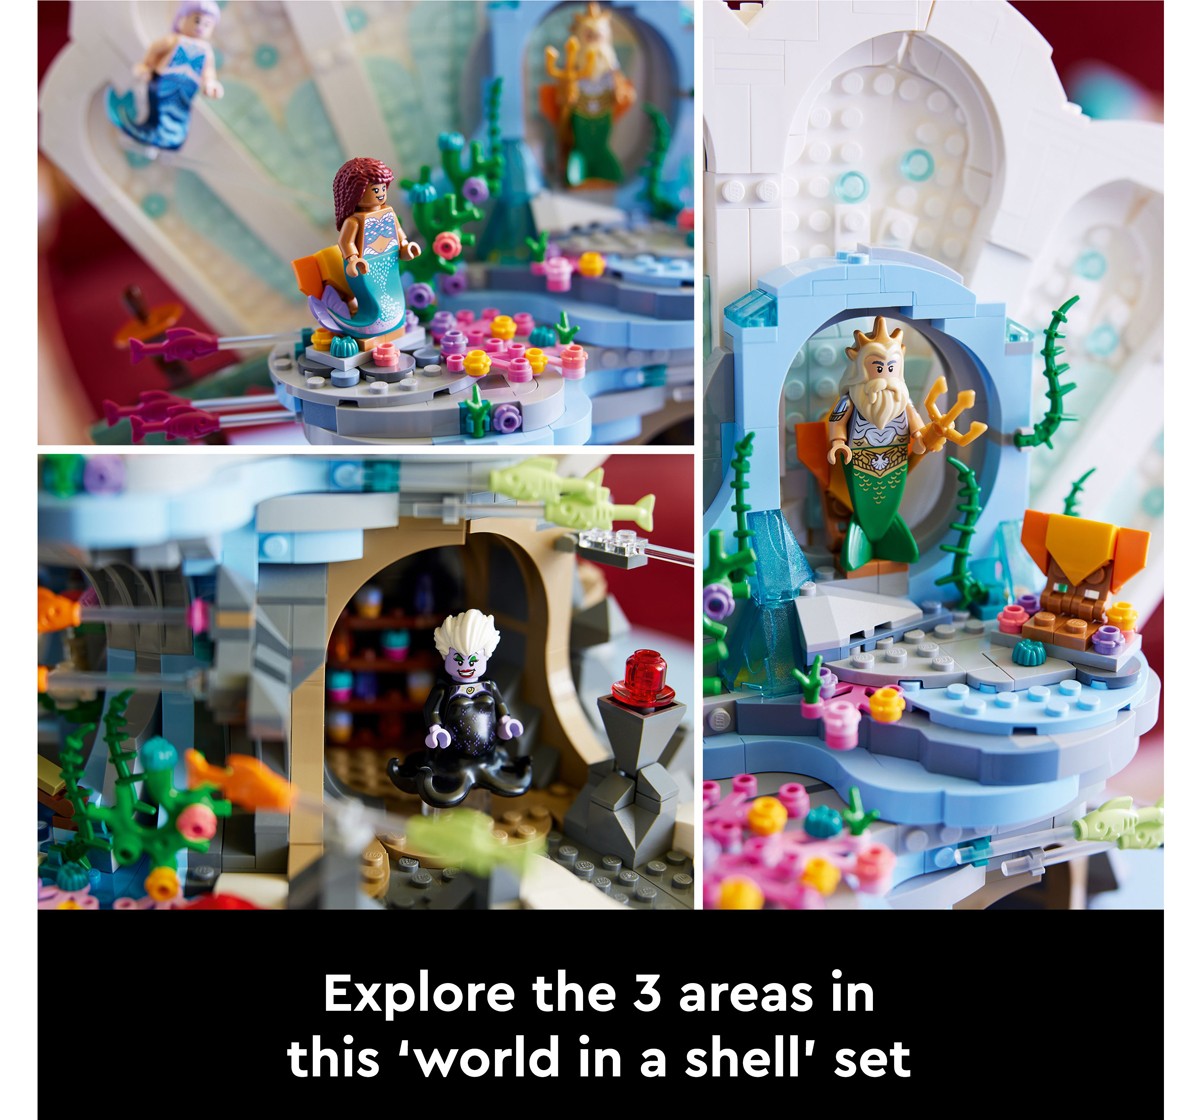 LEGO Disney The Little Mermaid Royal Clamshell 43225 Building Set (1,808 Pieces), 18Y+